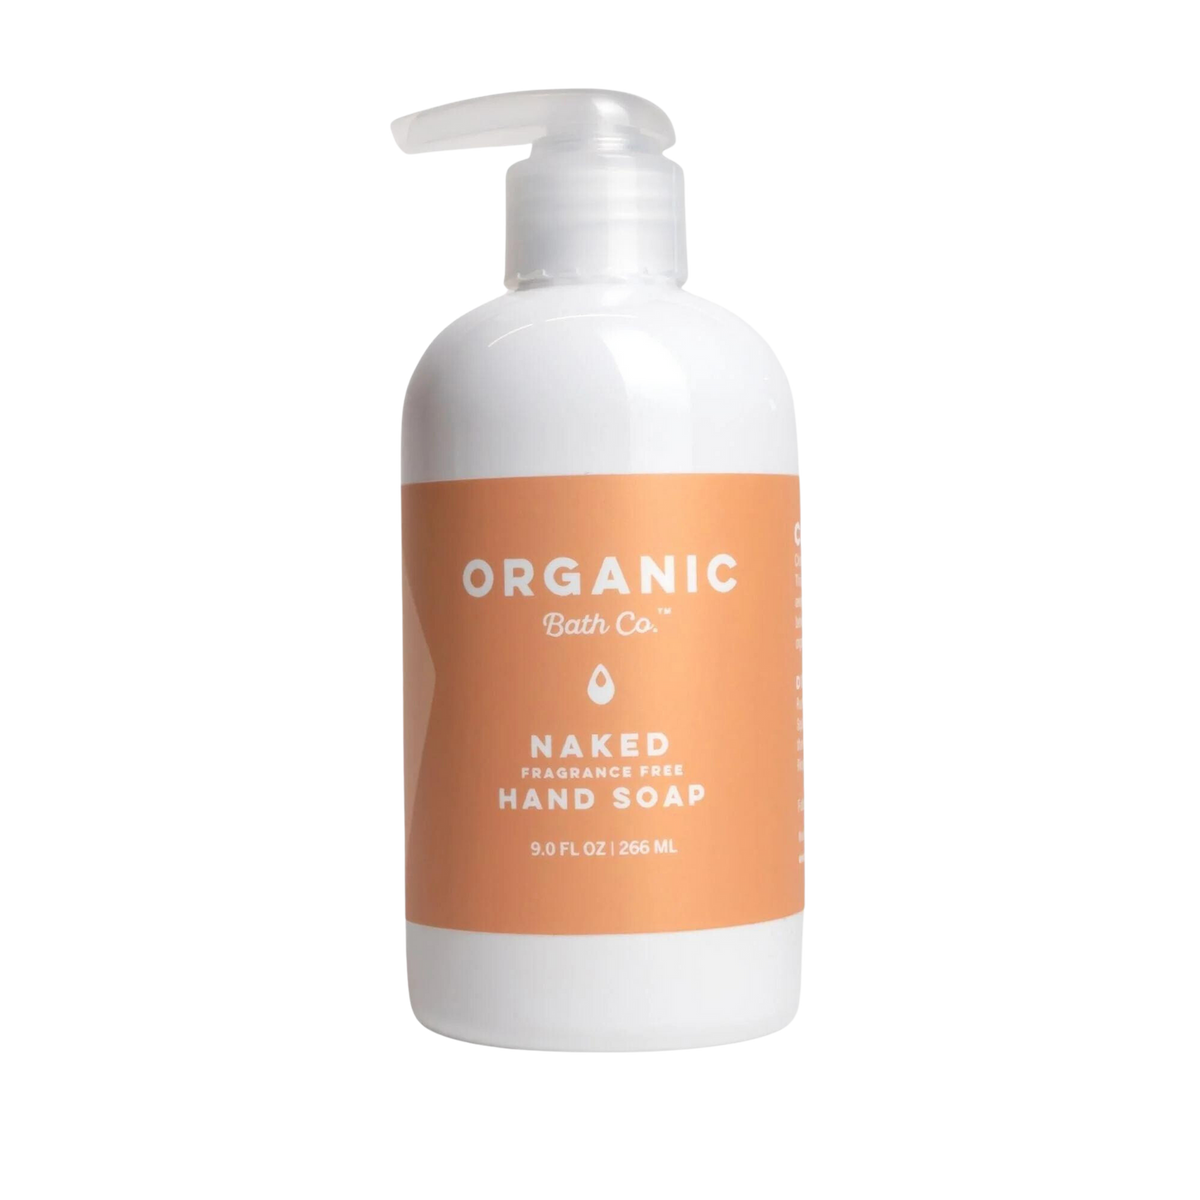 Organic Bath Co. Naked Hand Soap 8oz